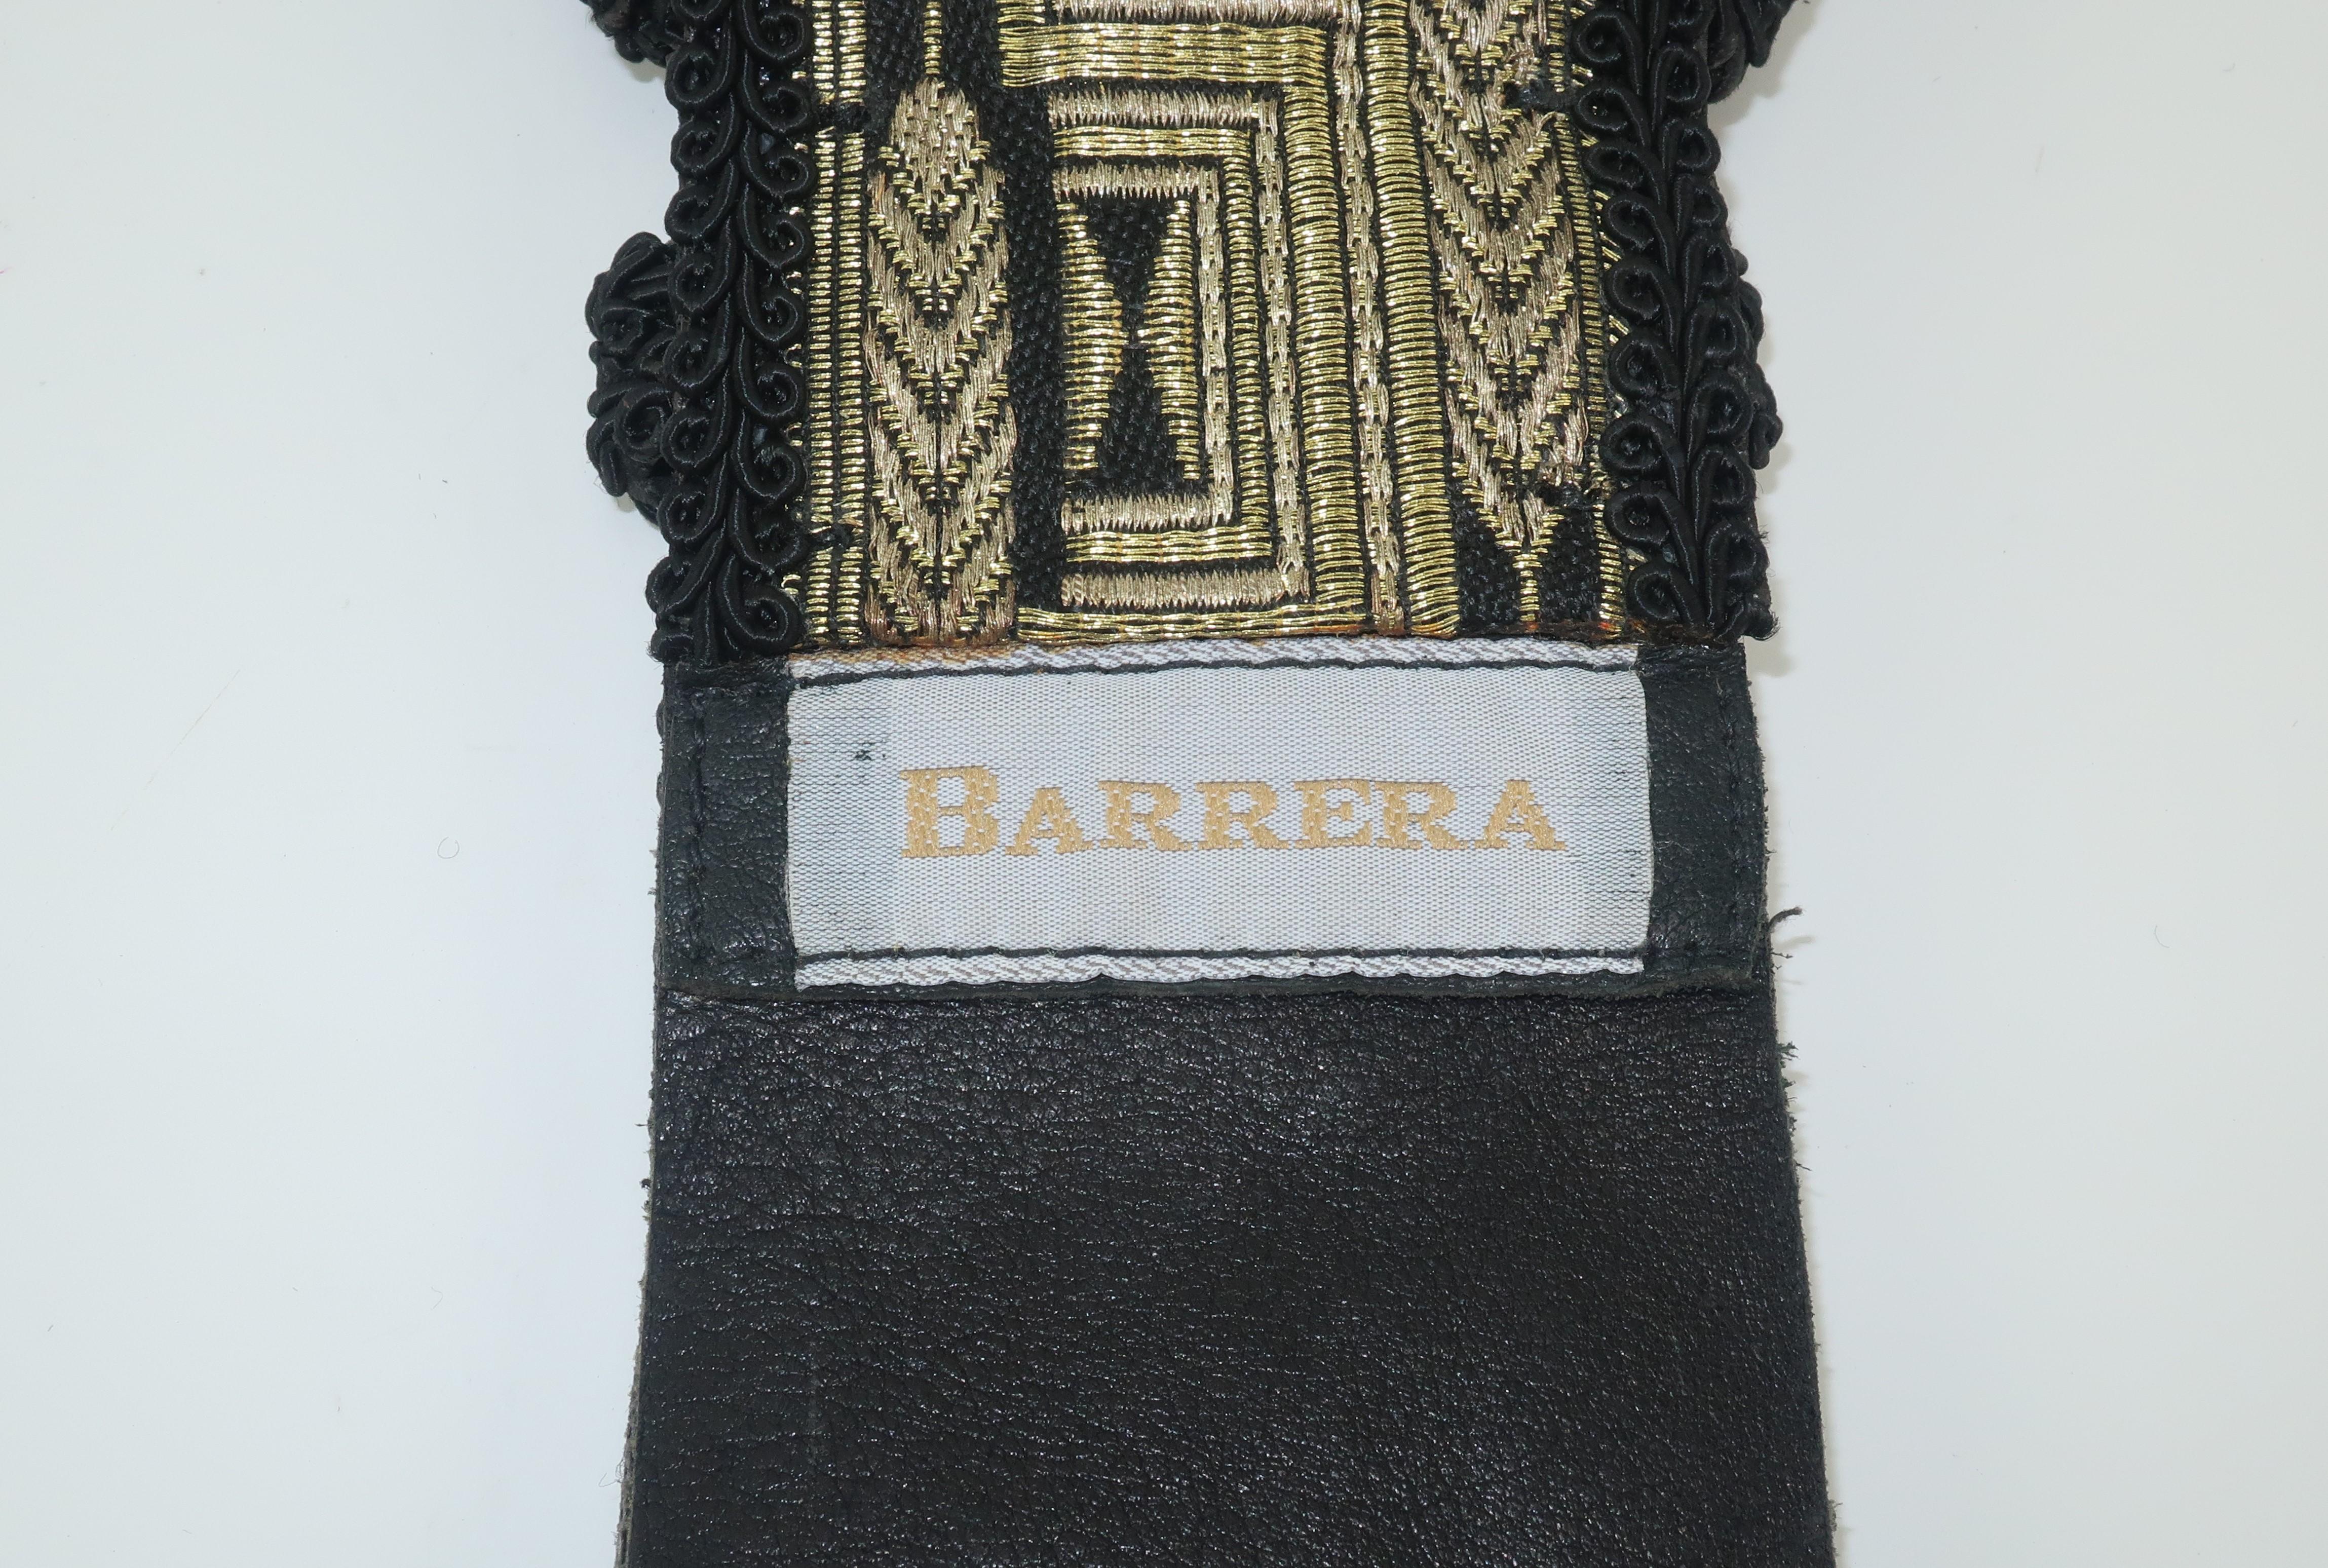 Barrera Black & Gold Ornate Brocade Belt 2